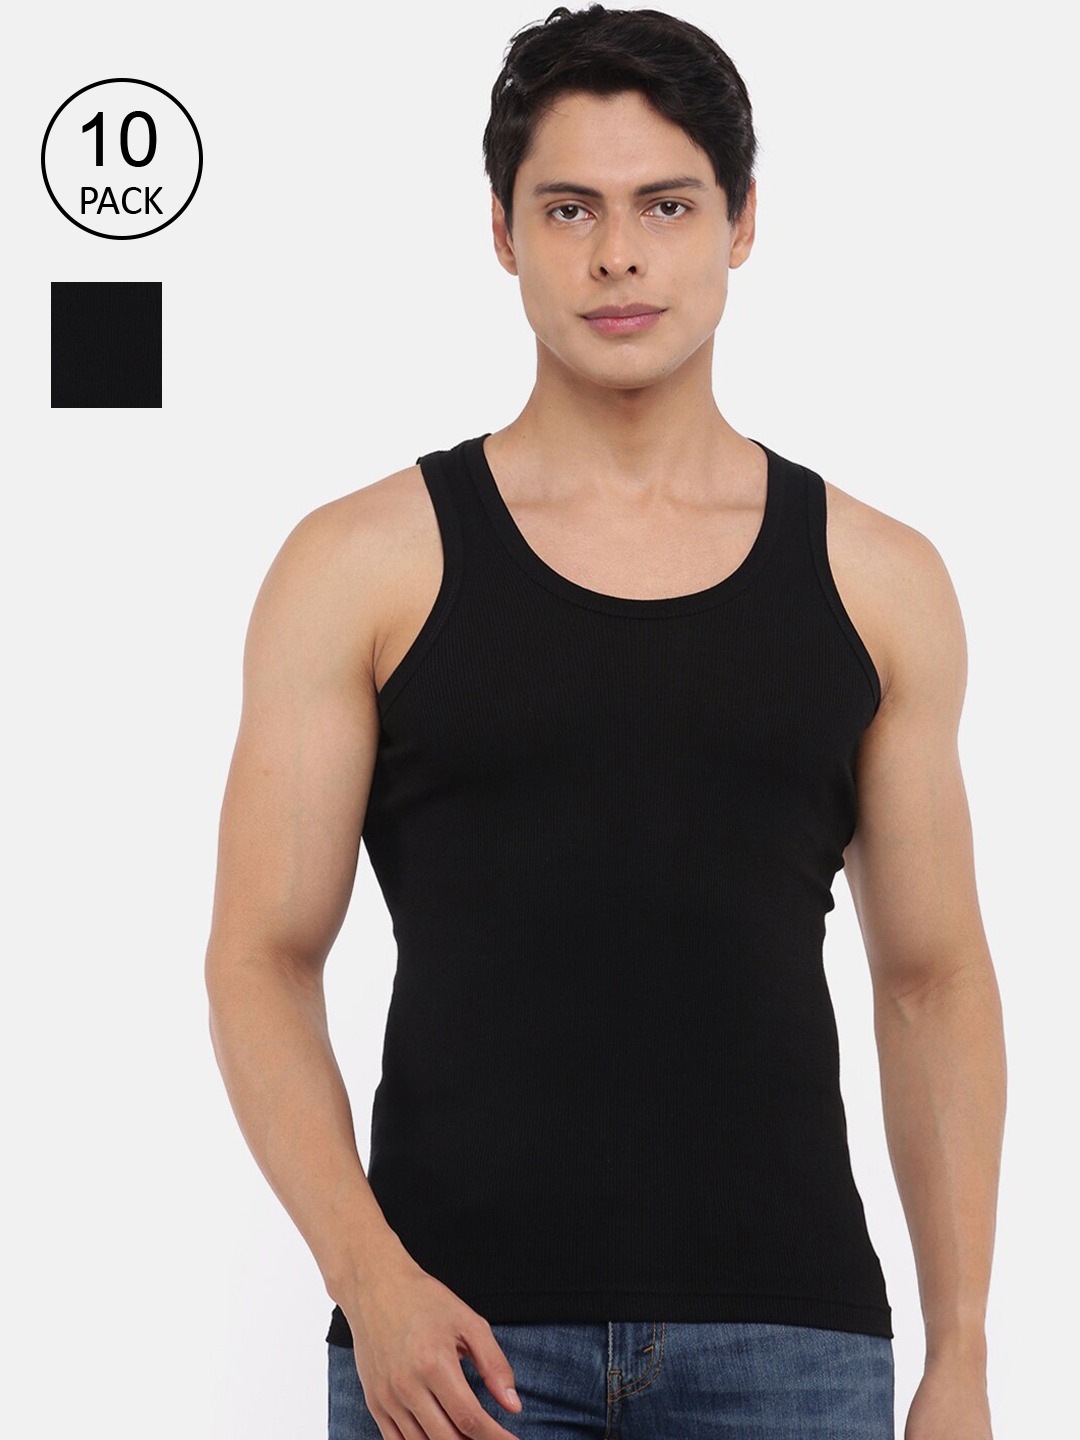 Clothing Innerwear Vests | Dollar Bigboss Men Pack of 10 Black Solid Pure Super Combed Cotton Innerwear Vests - NE02005